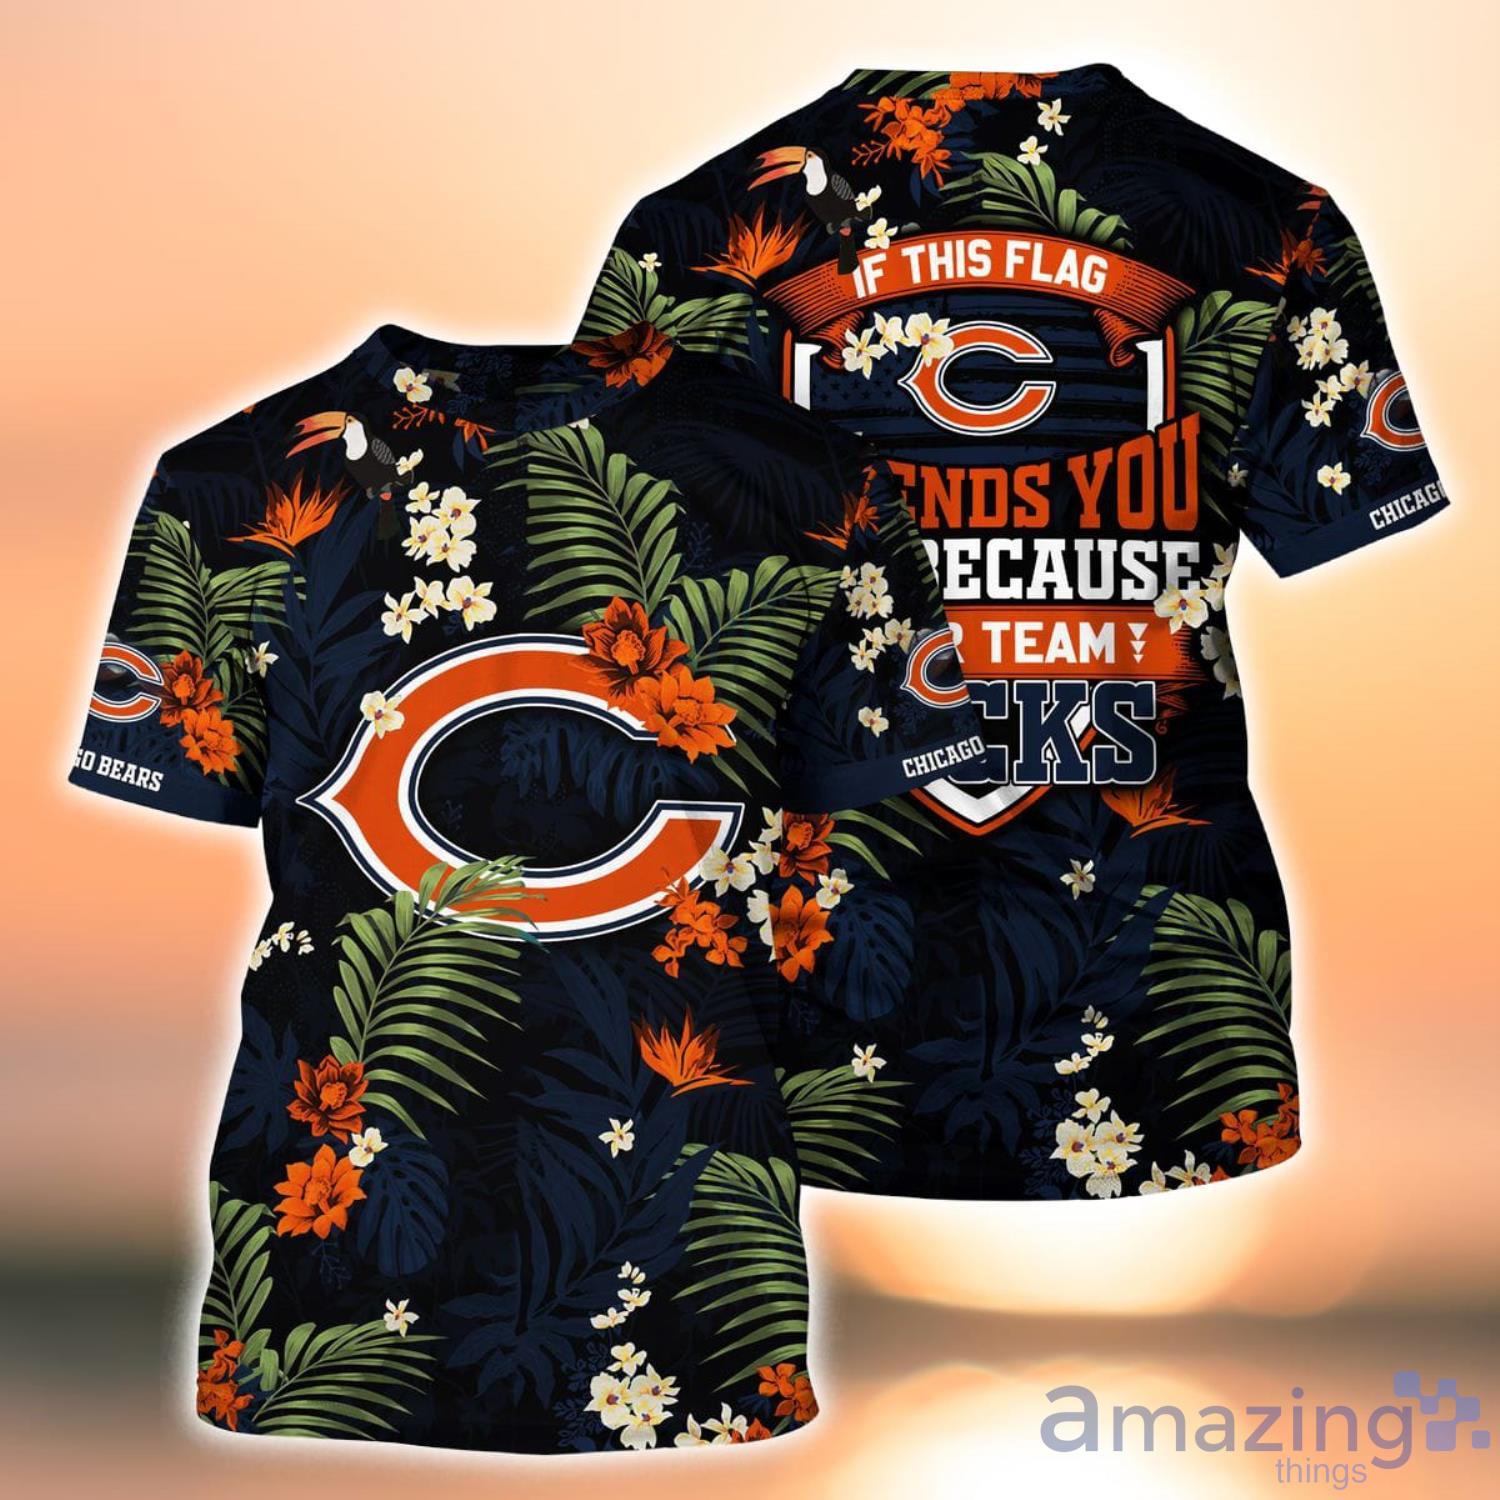 NFL Chicago Bears Logo Hot Hawaiian Shirt Gift For Men And Women Color  White - Banantees